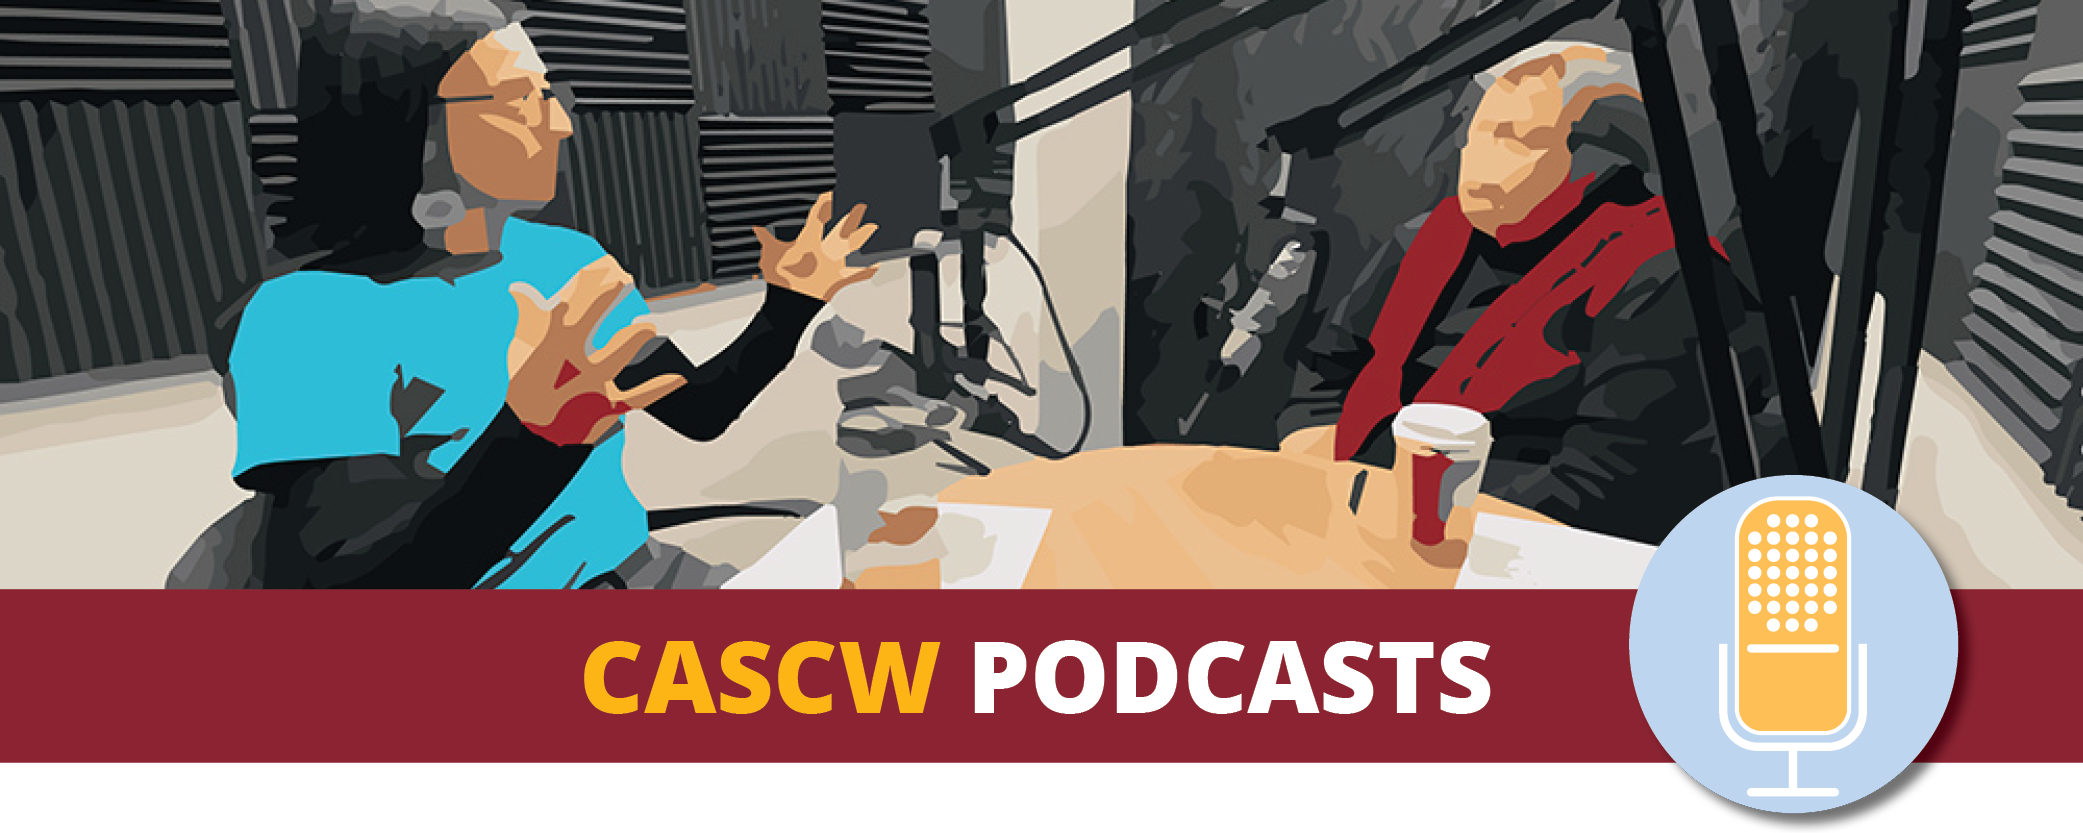 cascw podcast header